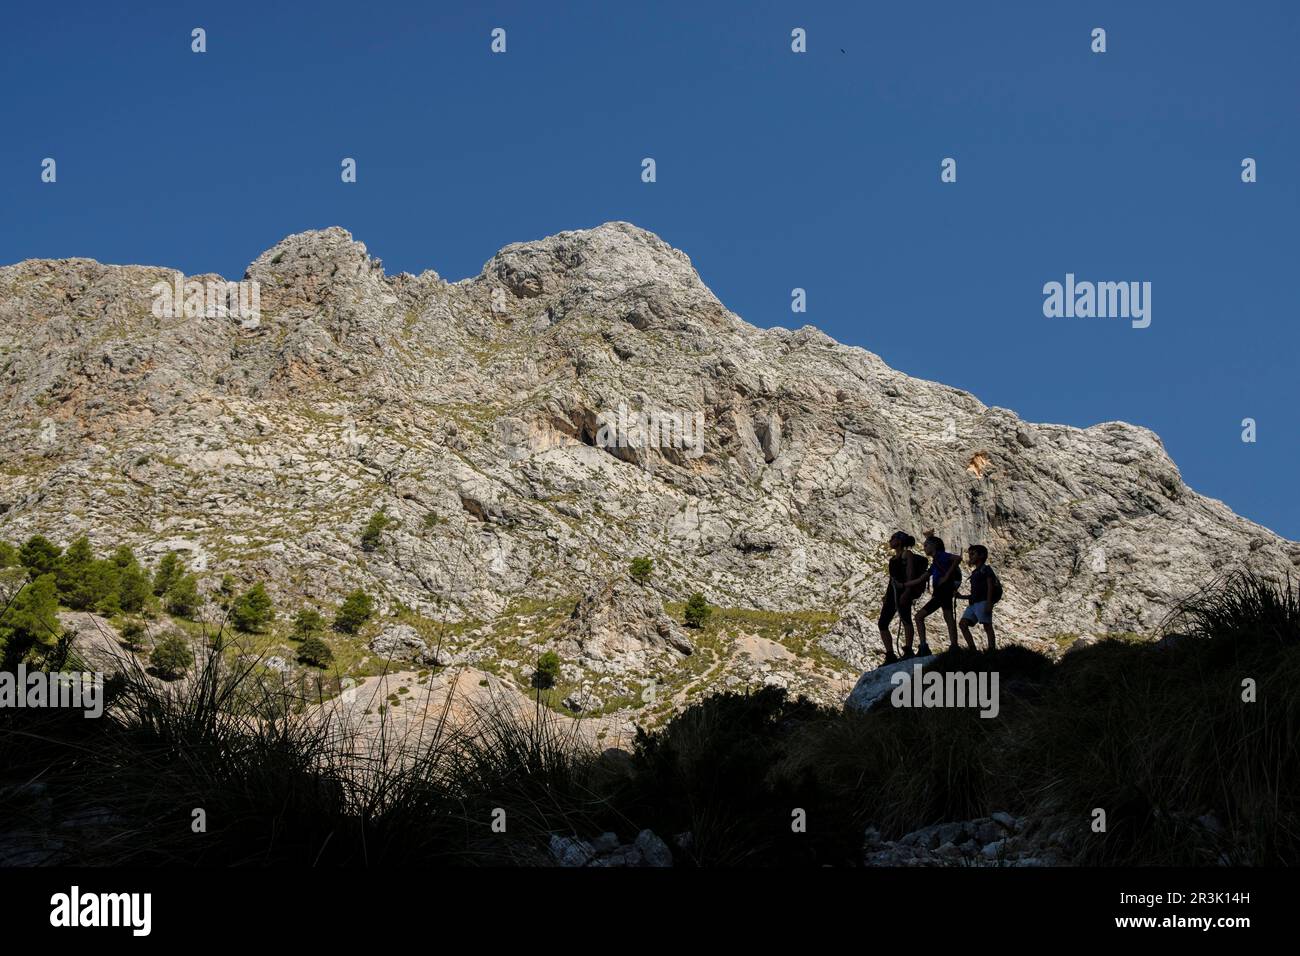 silueta de escursionistas en Coma de n'Arbona, Penyal des Migdia, 1401 metros, término municipal de Fornalutx, paraje natural de la Sierra de Tramuntana, Mallorca, balearic islands, Spain. Stock Photo